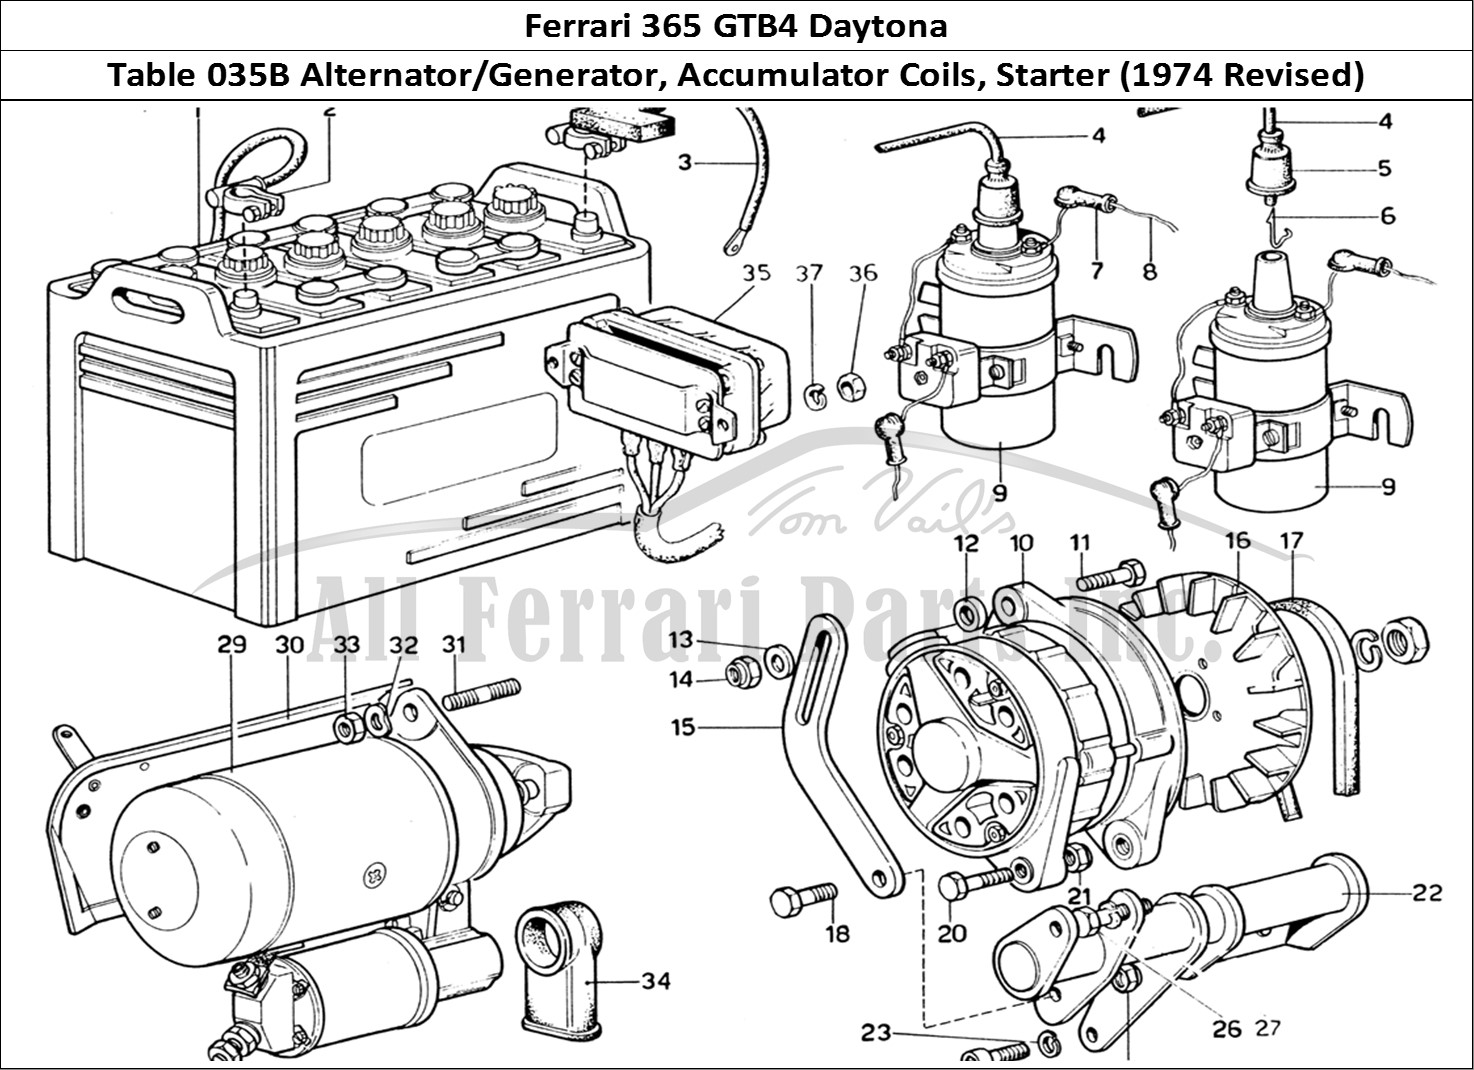 Ferrari Parts Ferrari 365 GTB4 Daytona (1969) Page 035 Generator, Accumulator Co